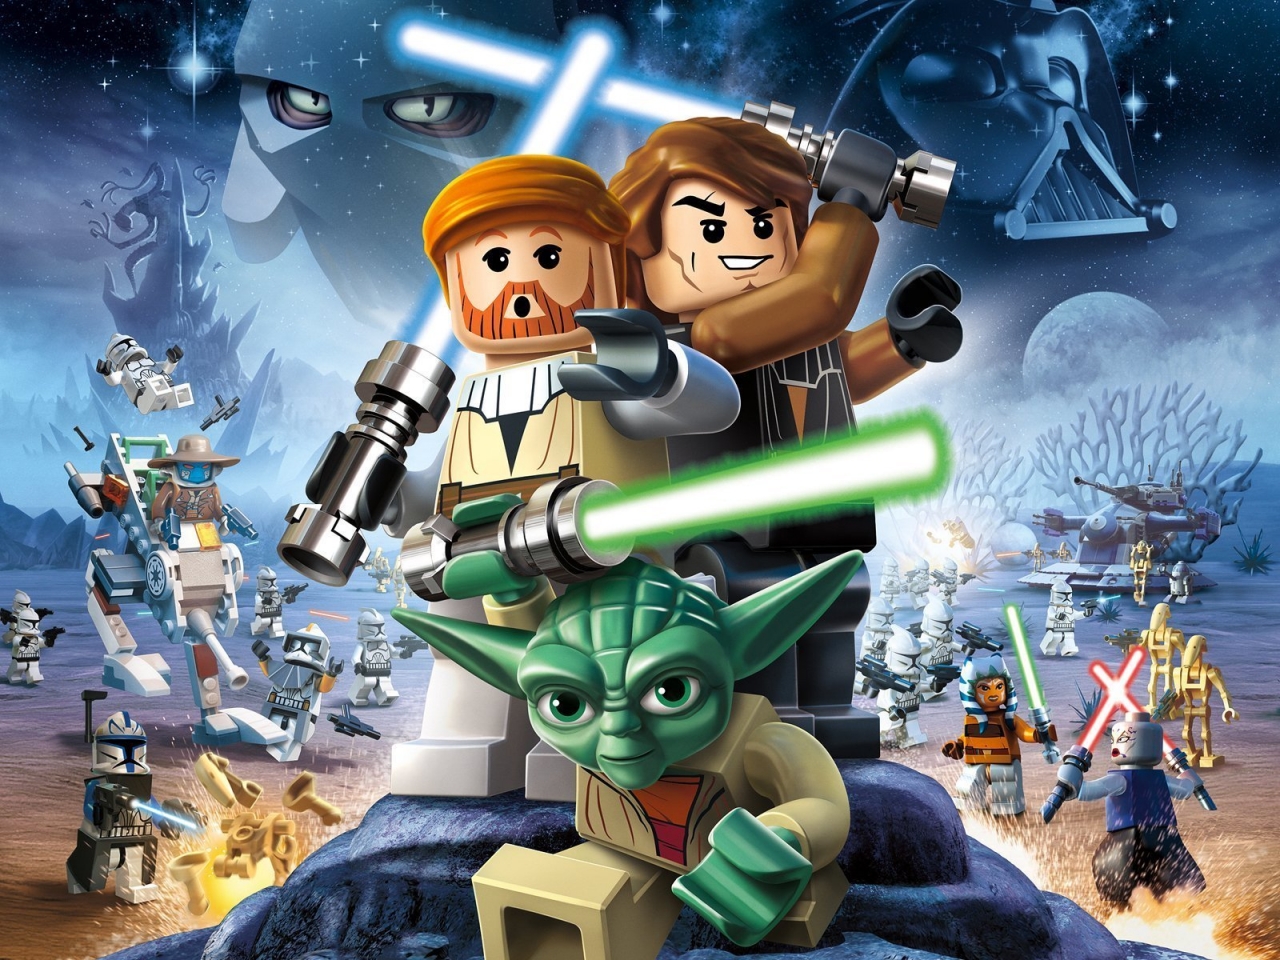 Lego Star Wars for 1280 x 960 resolution